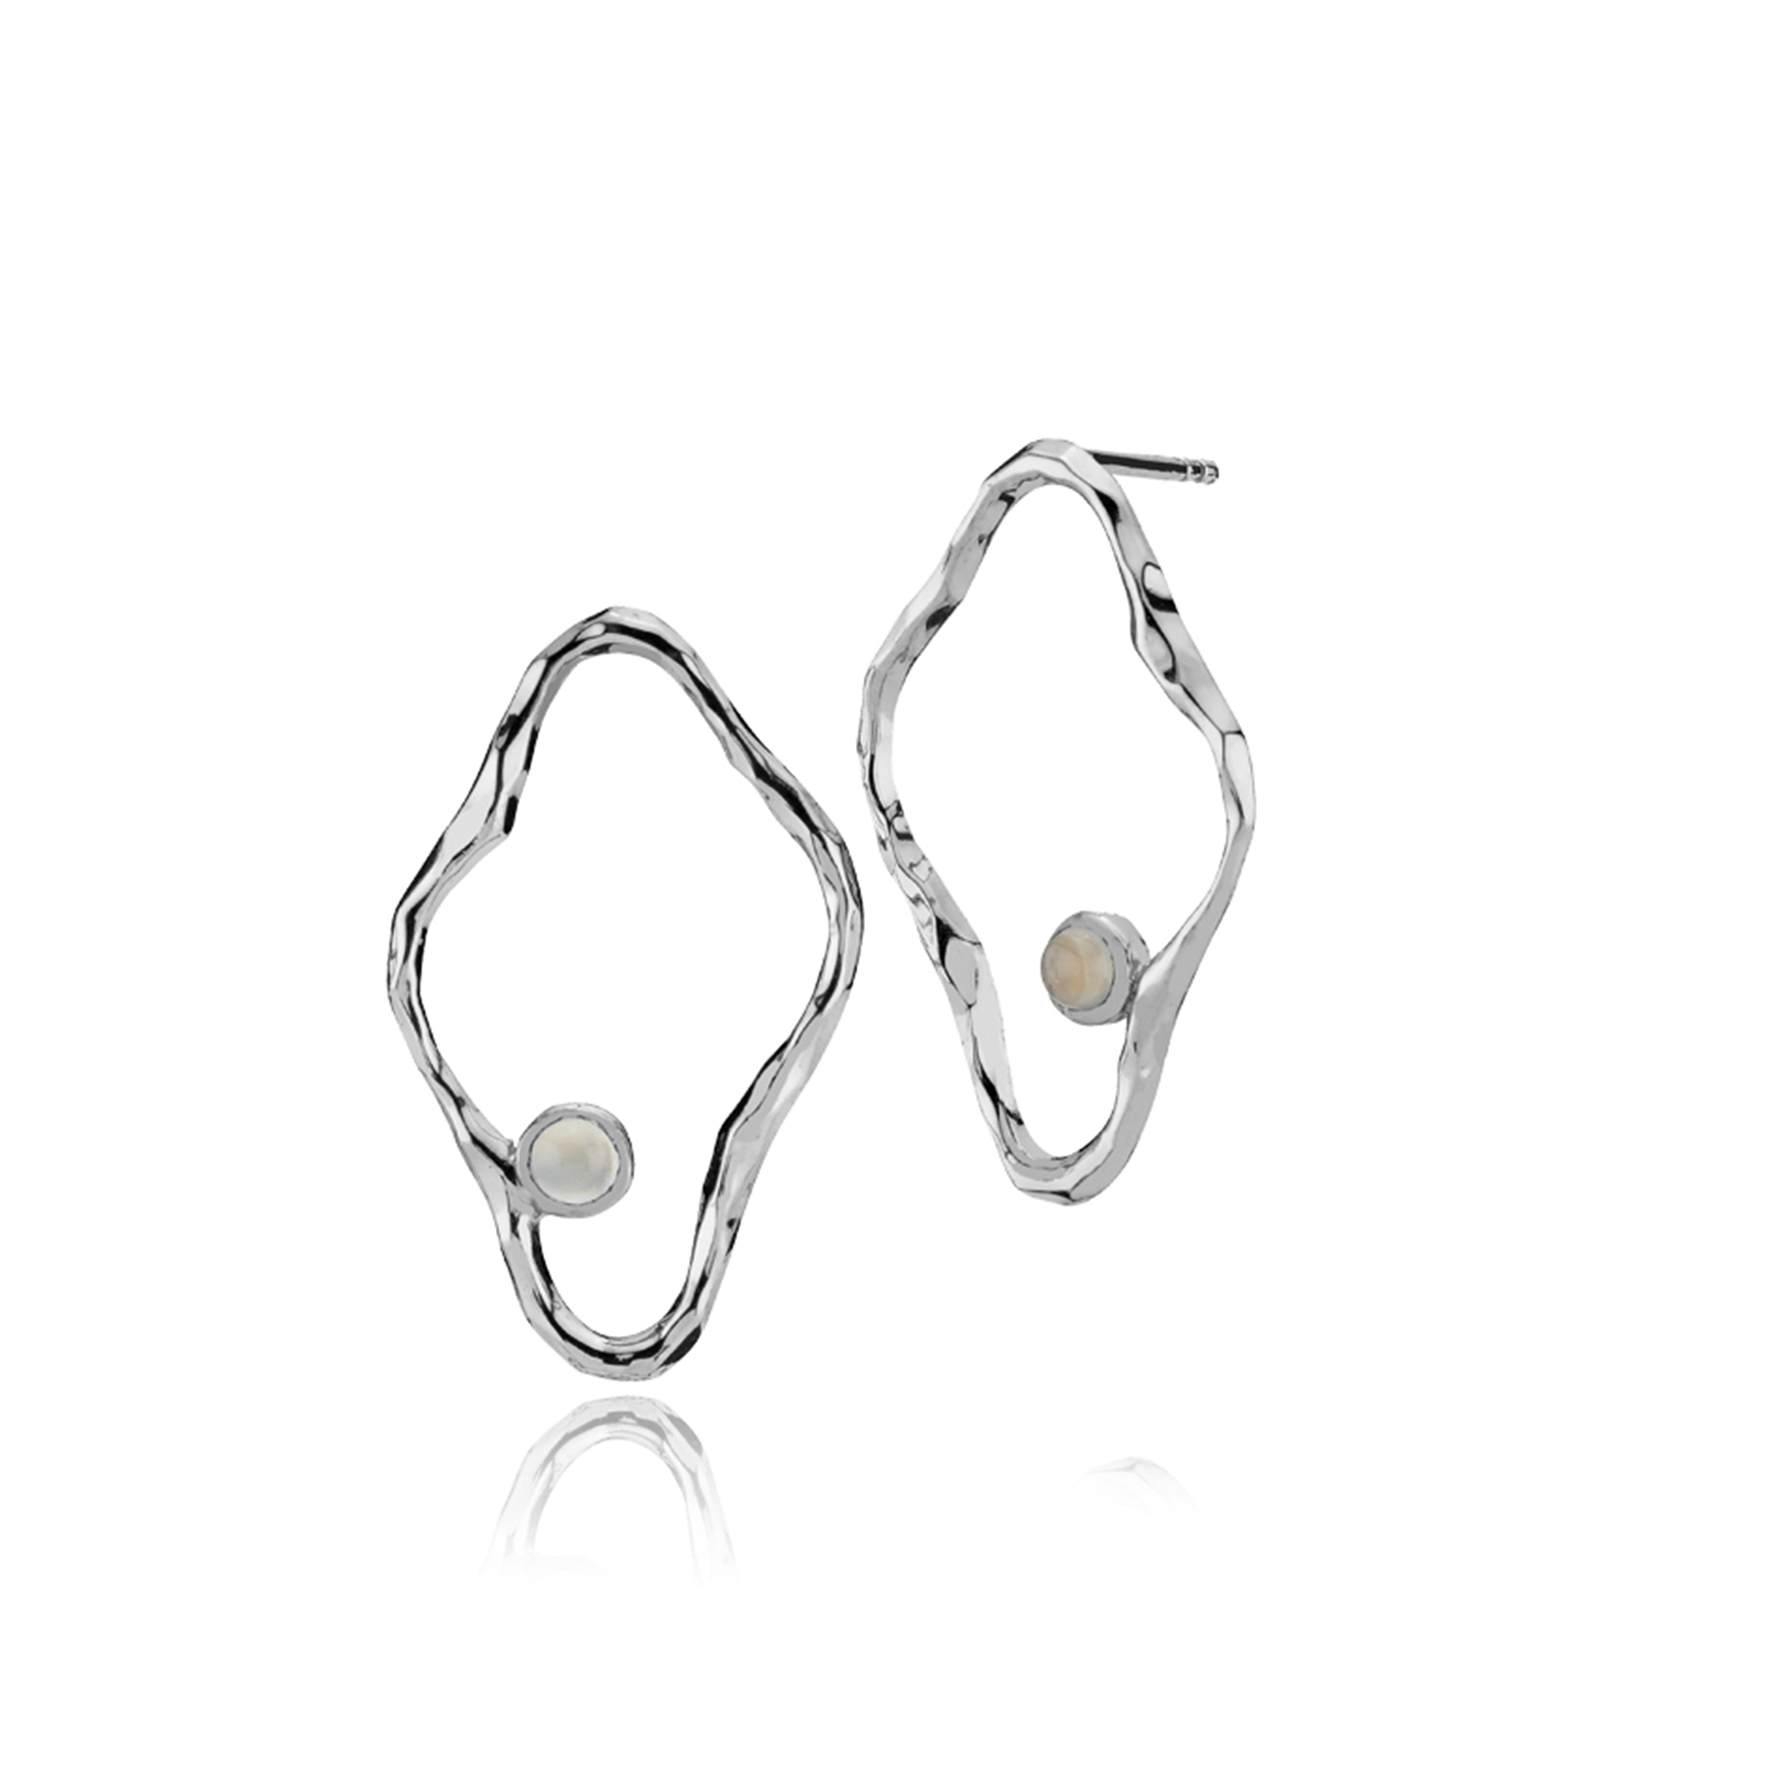 Melissa Bentsen Medium Earrings from Sistie in Silver Sterling 925